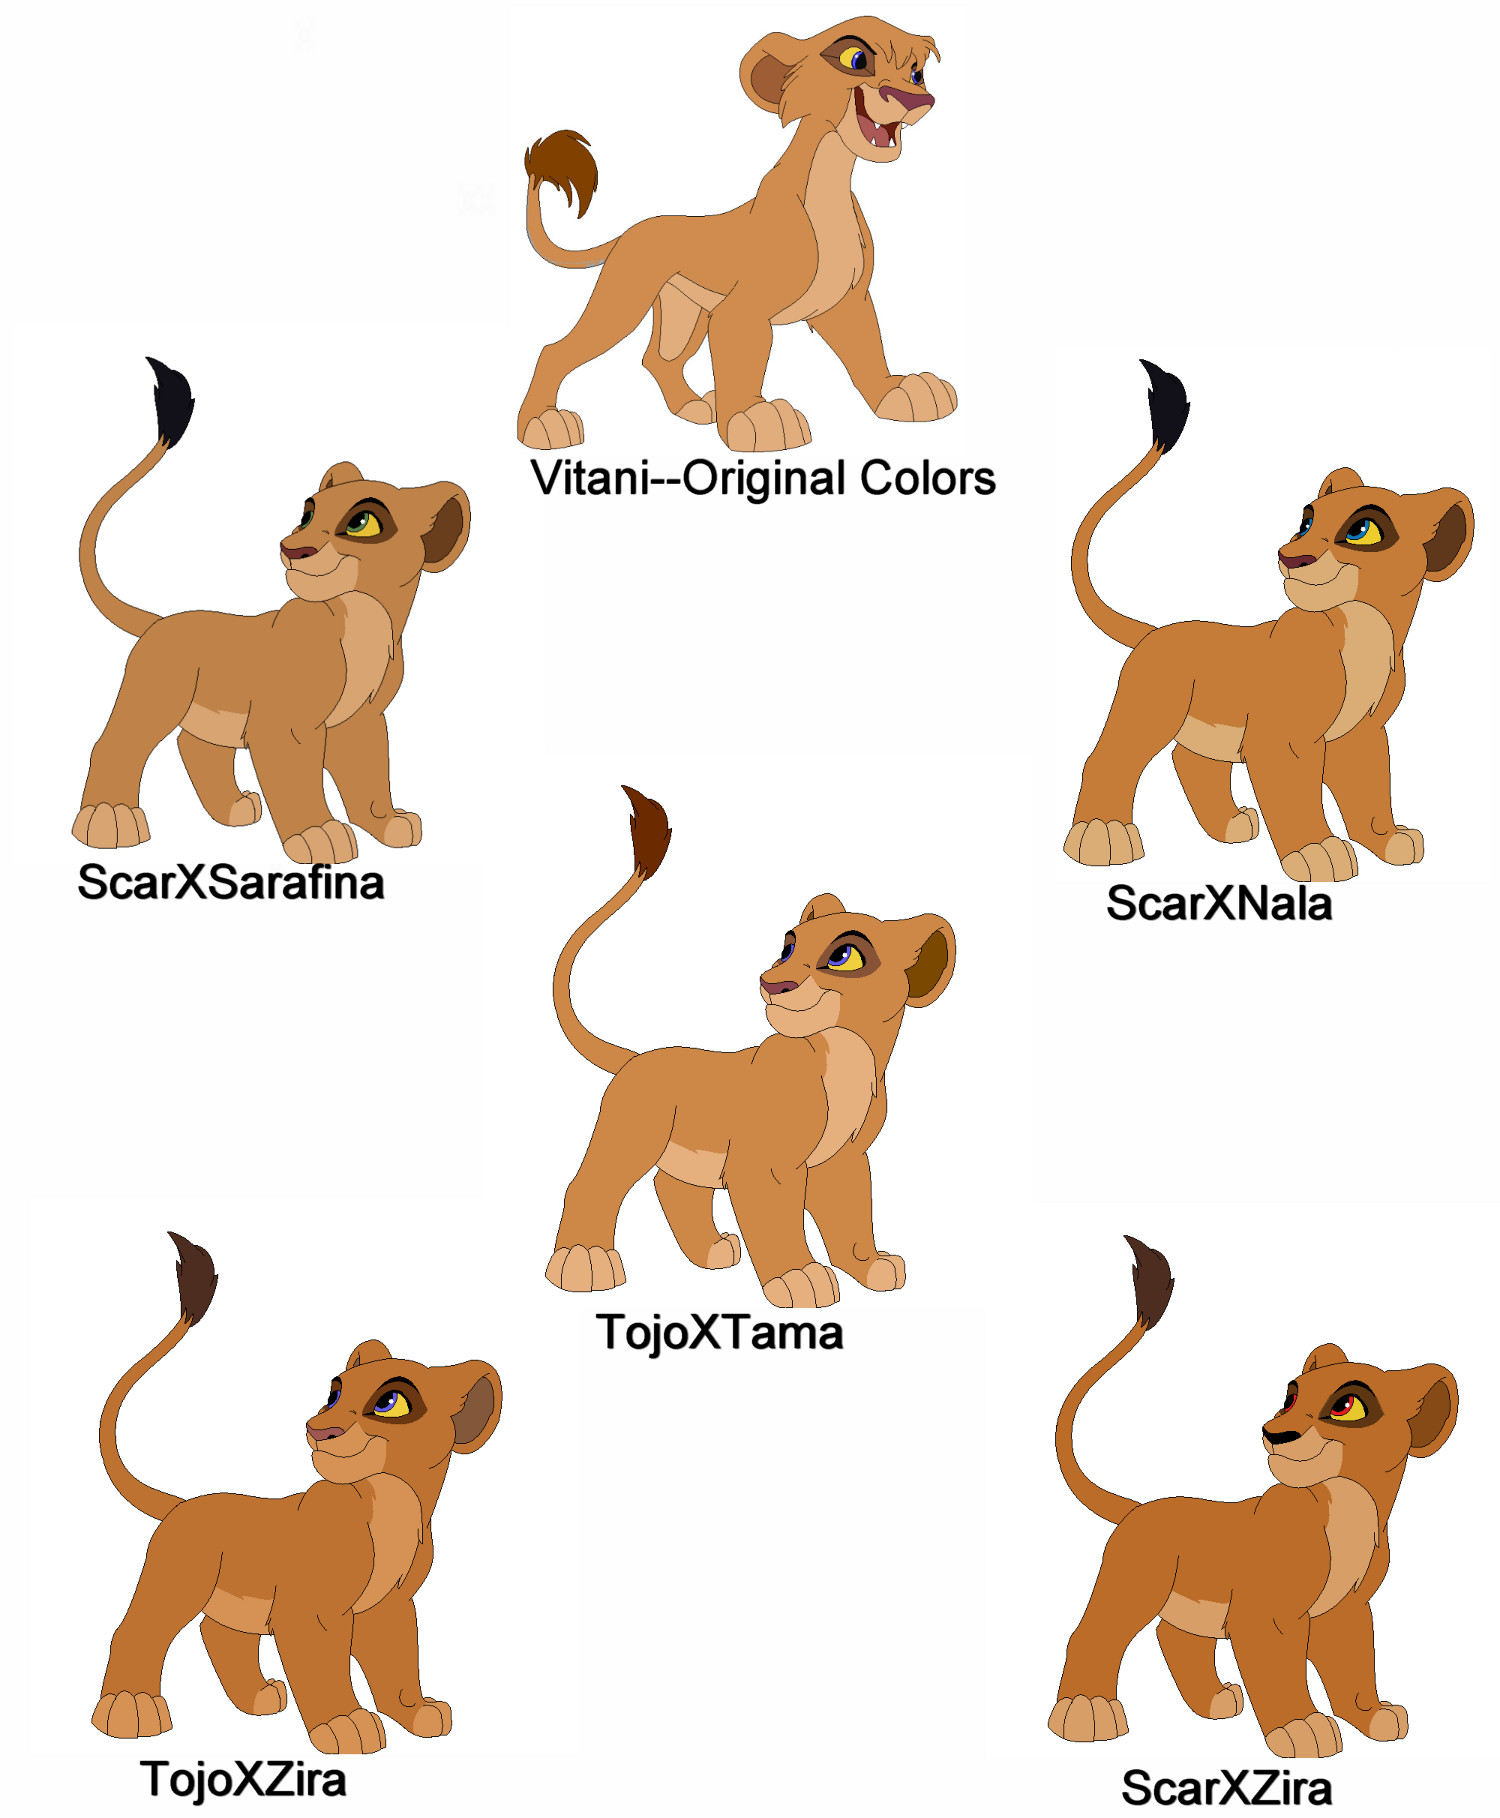 Vitani-Colorings (Cub)